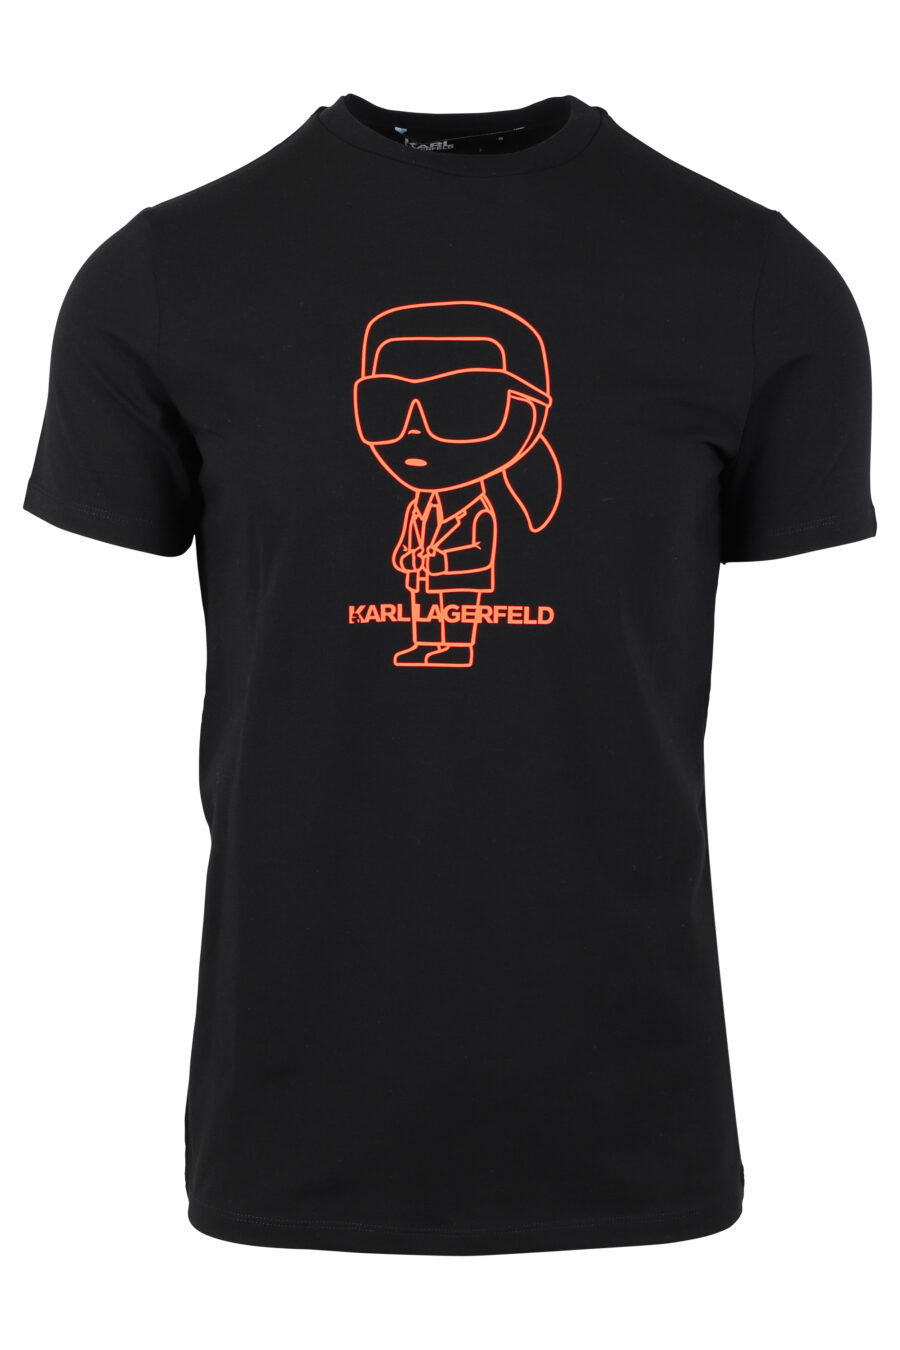 Black T-shirt with "karl" maxilogo in orange silhouette - IMG 4692